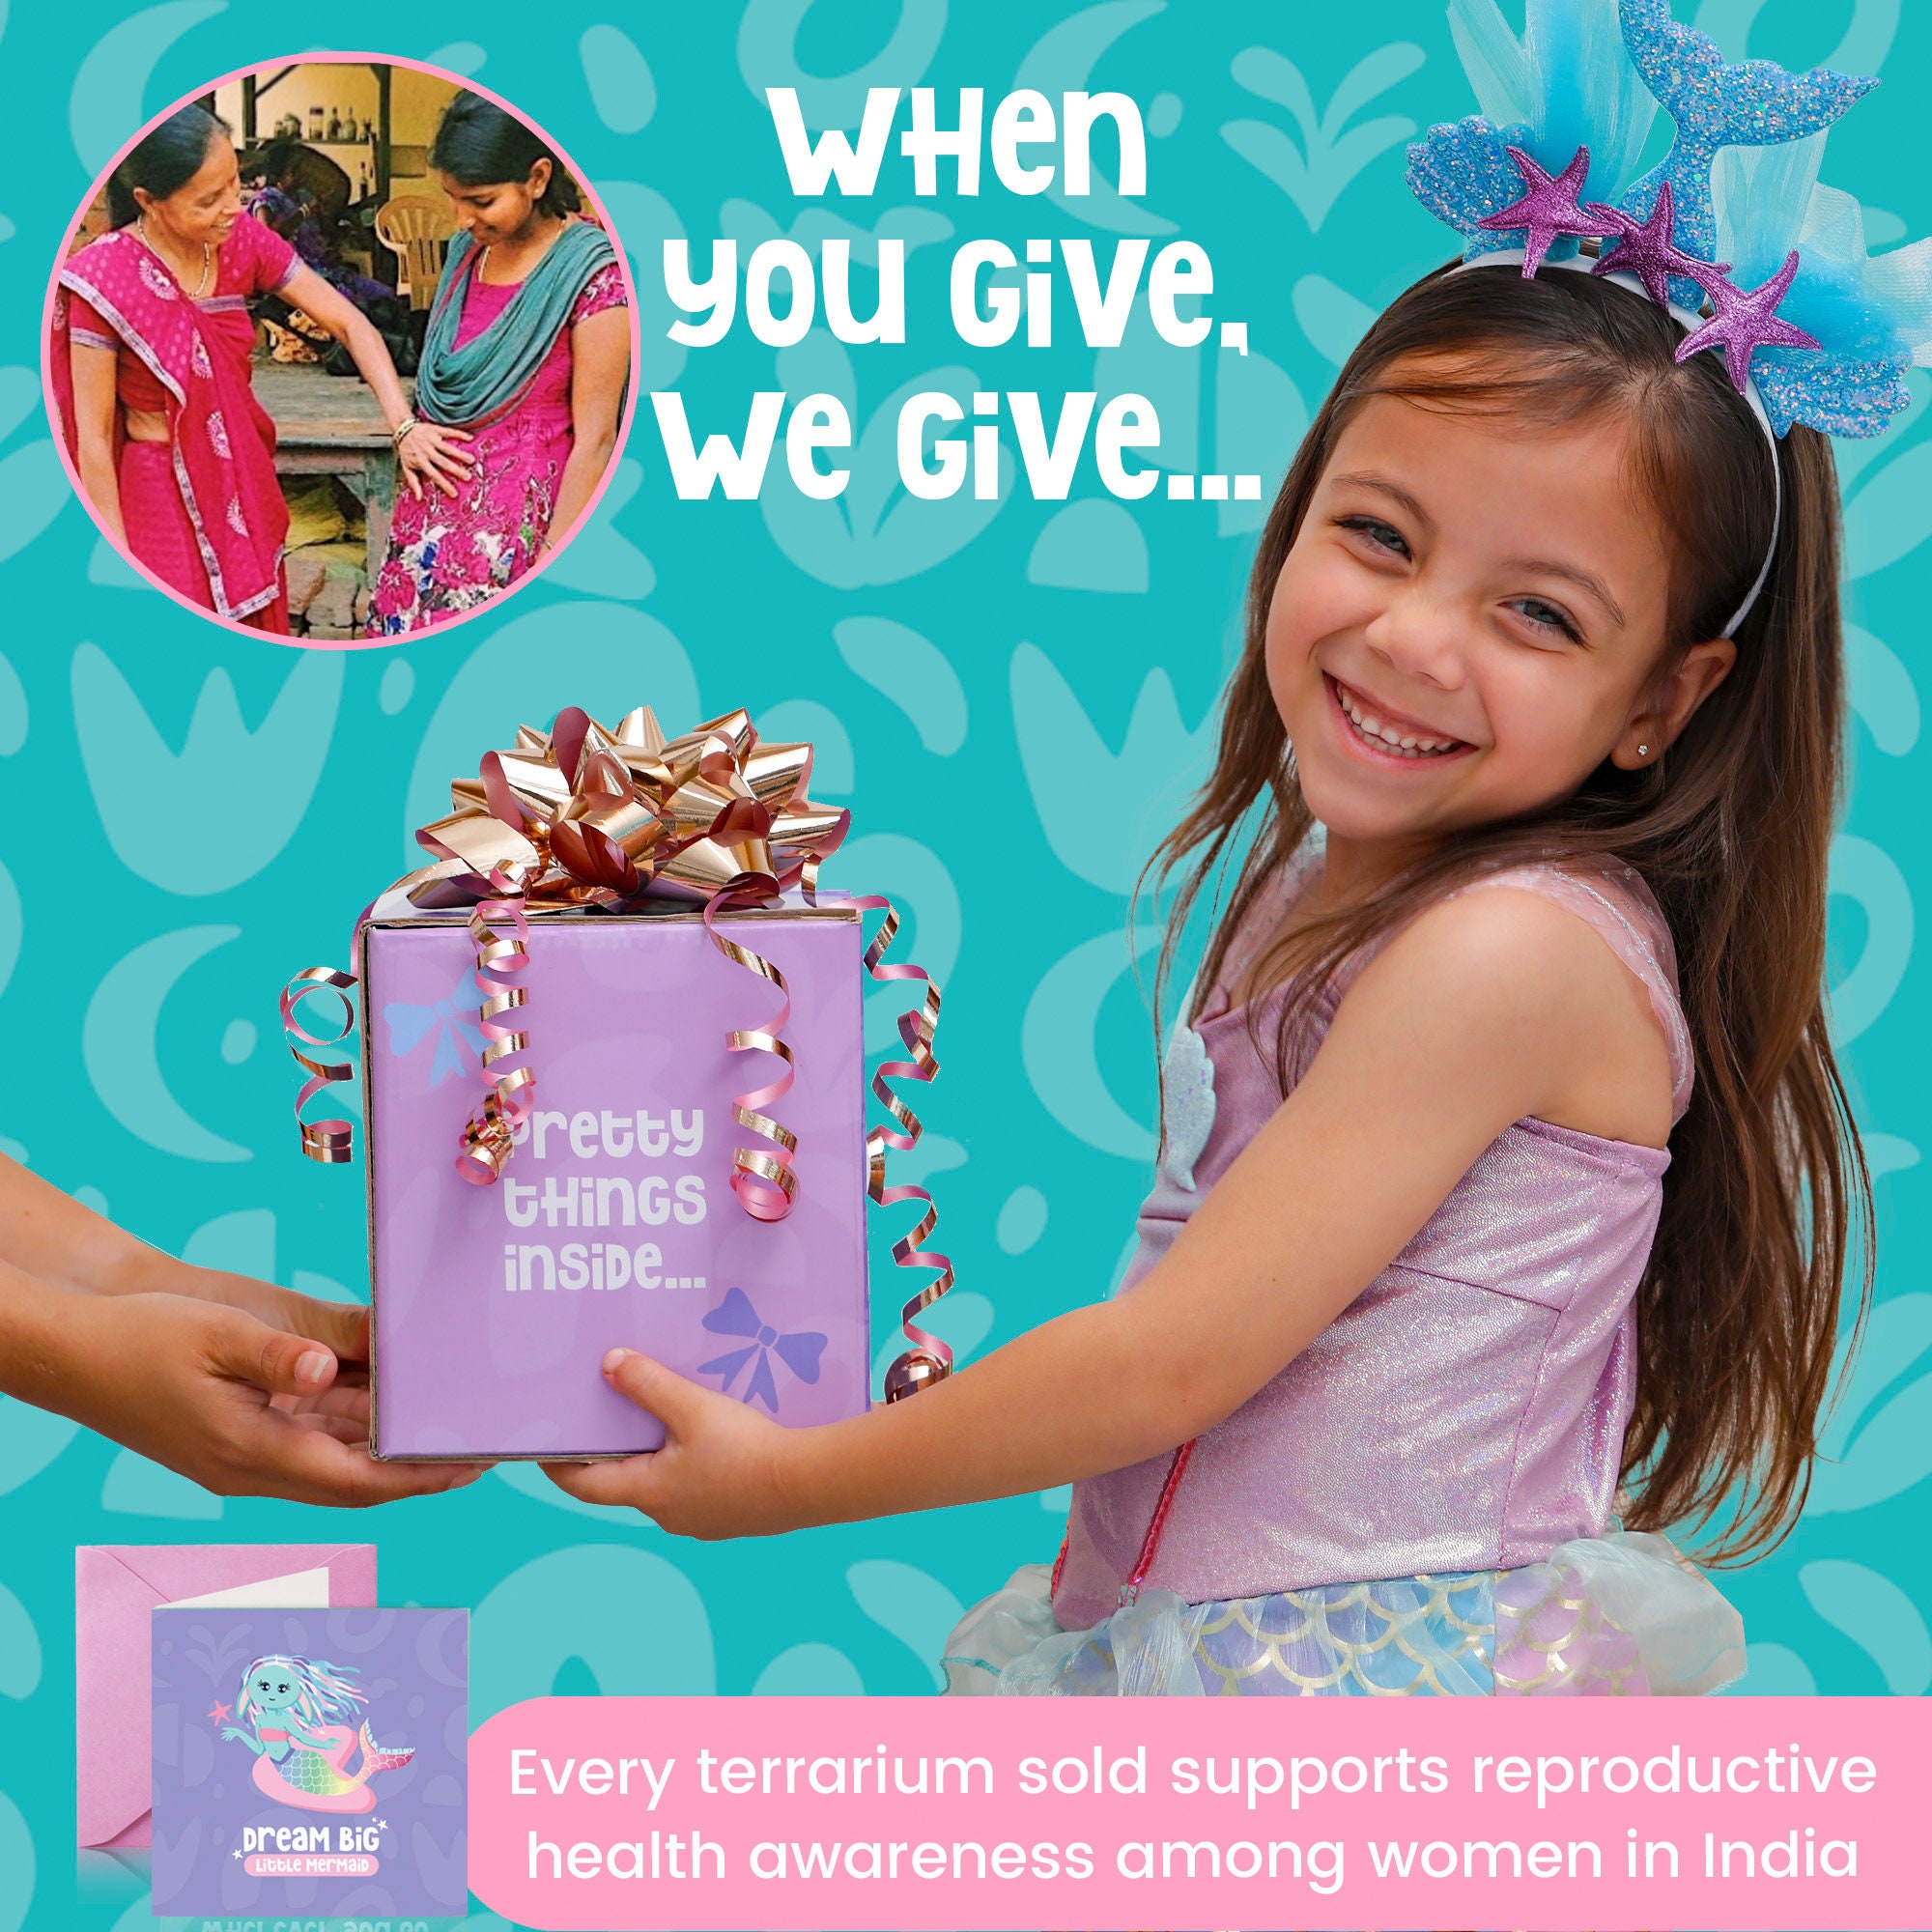 Amitié Lane Girls Mermaid Toys - DIY Light Up Terrarium Kit for Kids - Mermaid Gifts for Girls 5-7, Little Girl Gifts, Crafts for Girls - Birthday